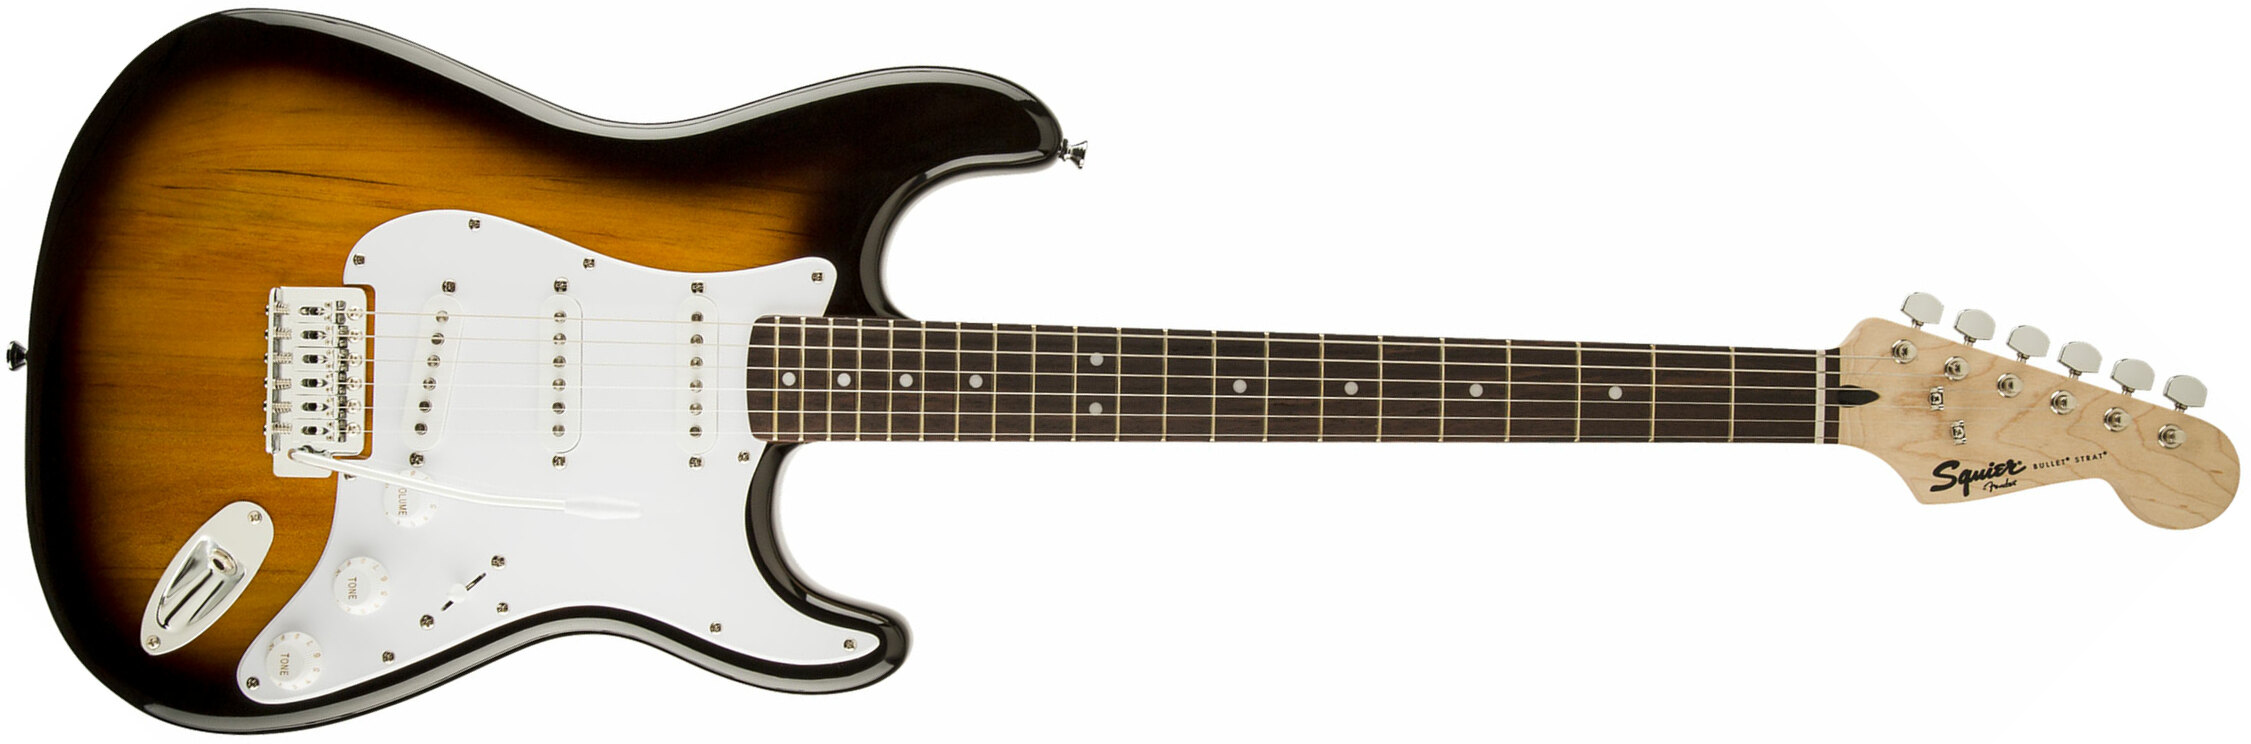 Squier Bullet Stratocaster With Tremolo Sss Lau - Brown Sunburst - Str shape electric guitar - Main picture